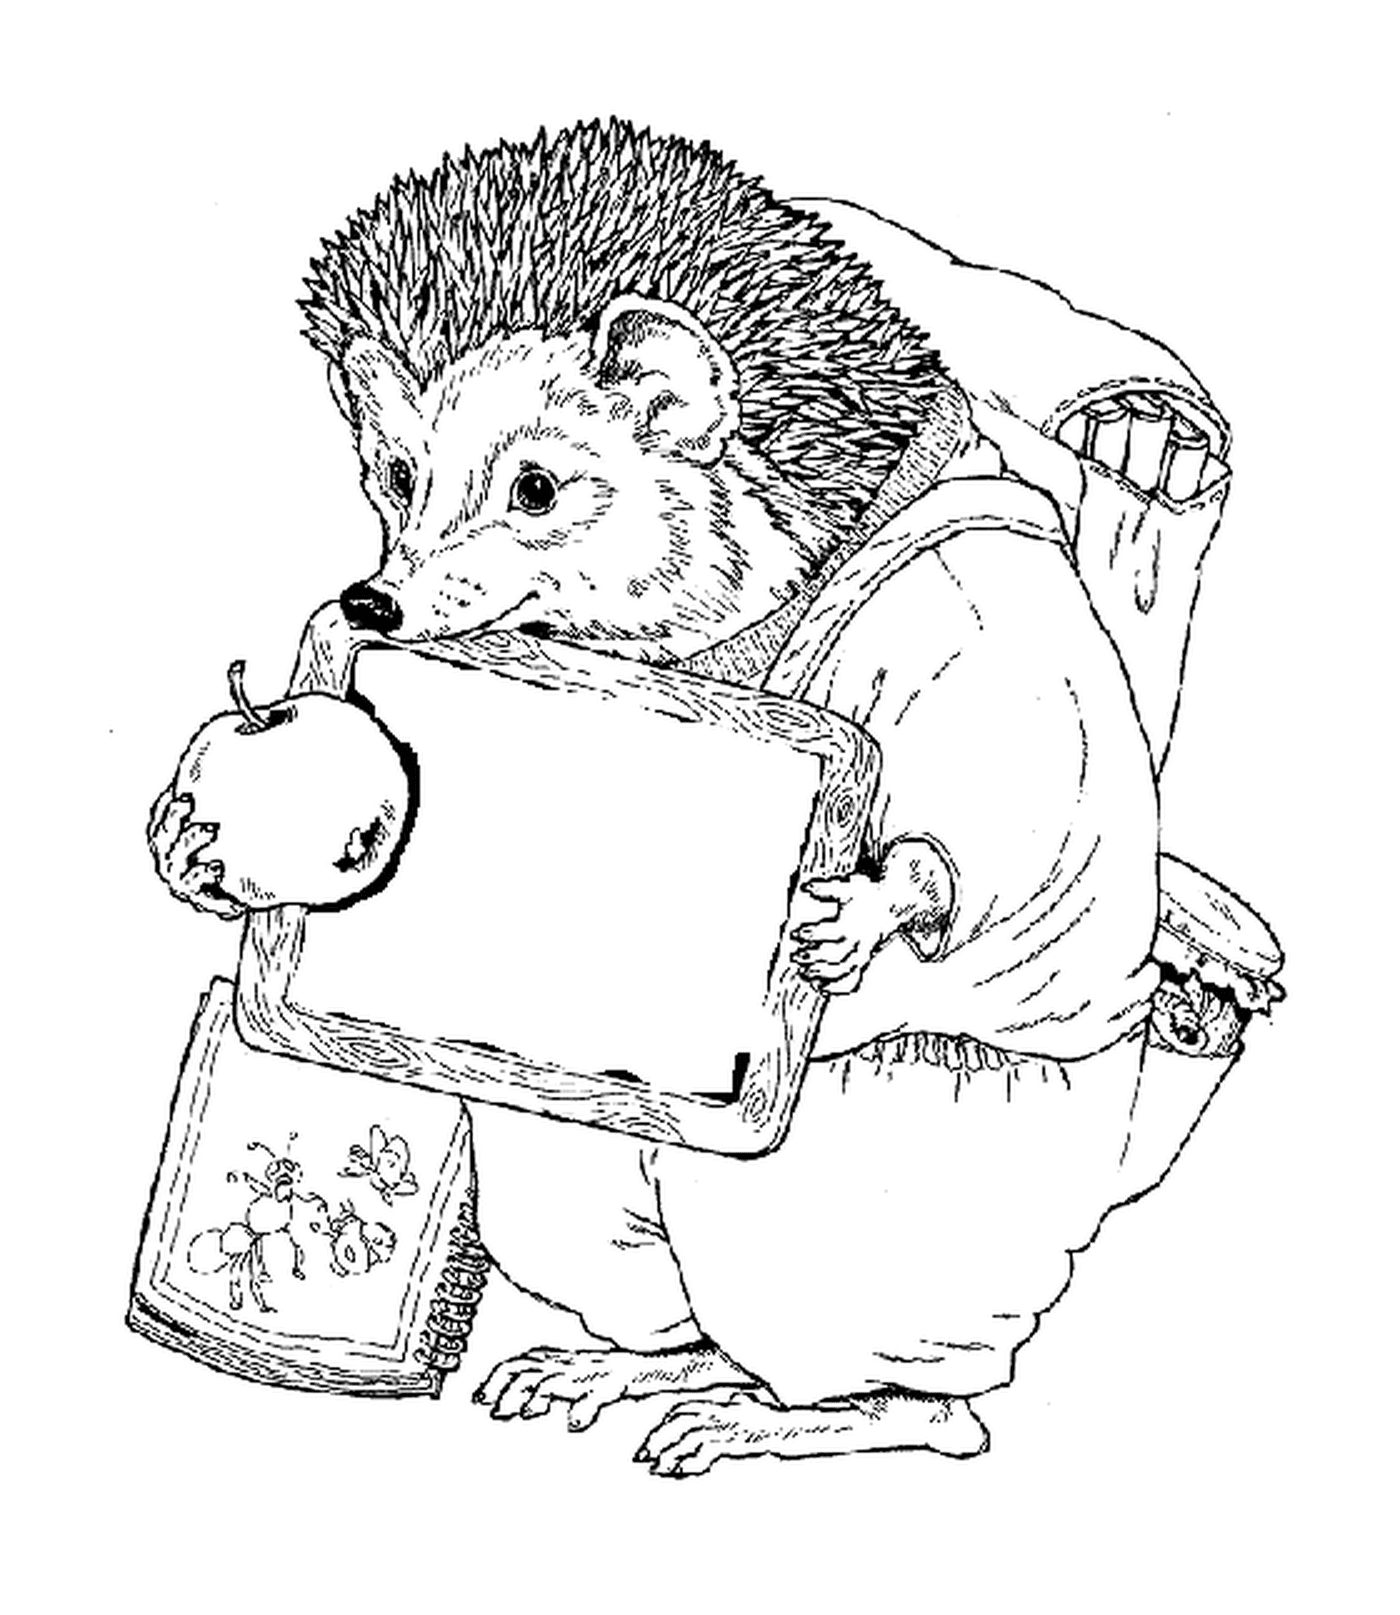  Hedgehog with his school bag 